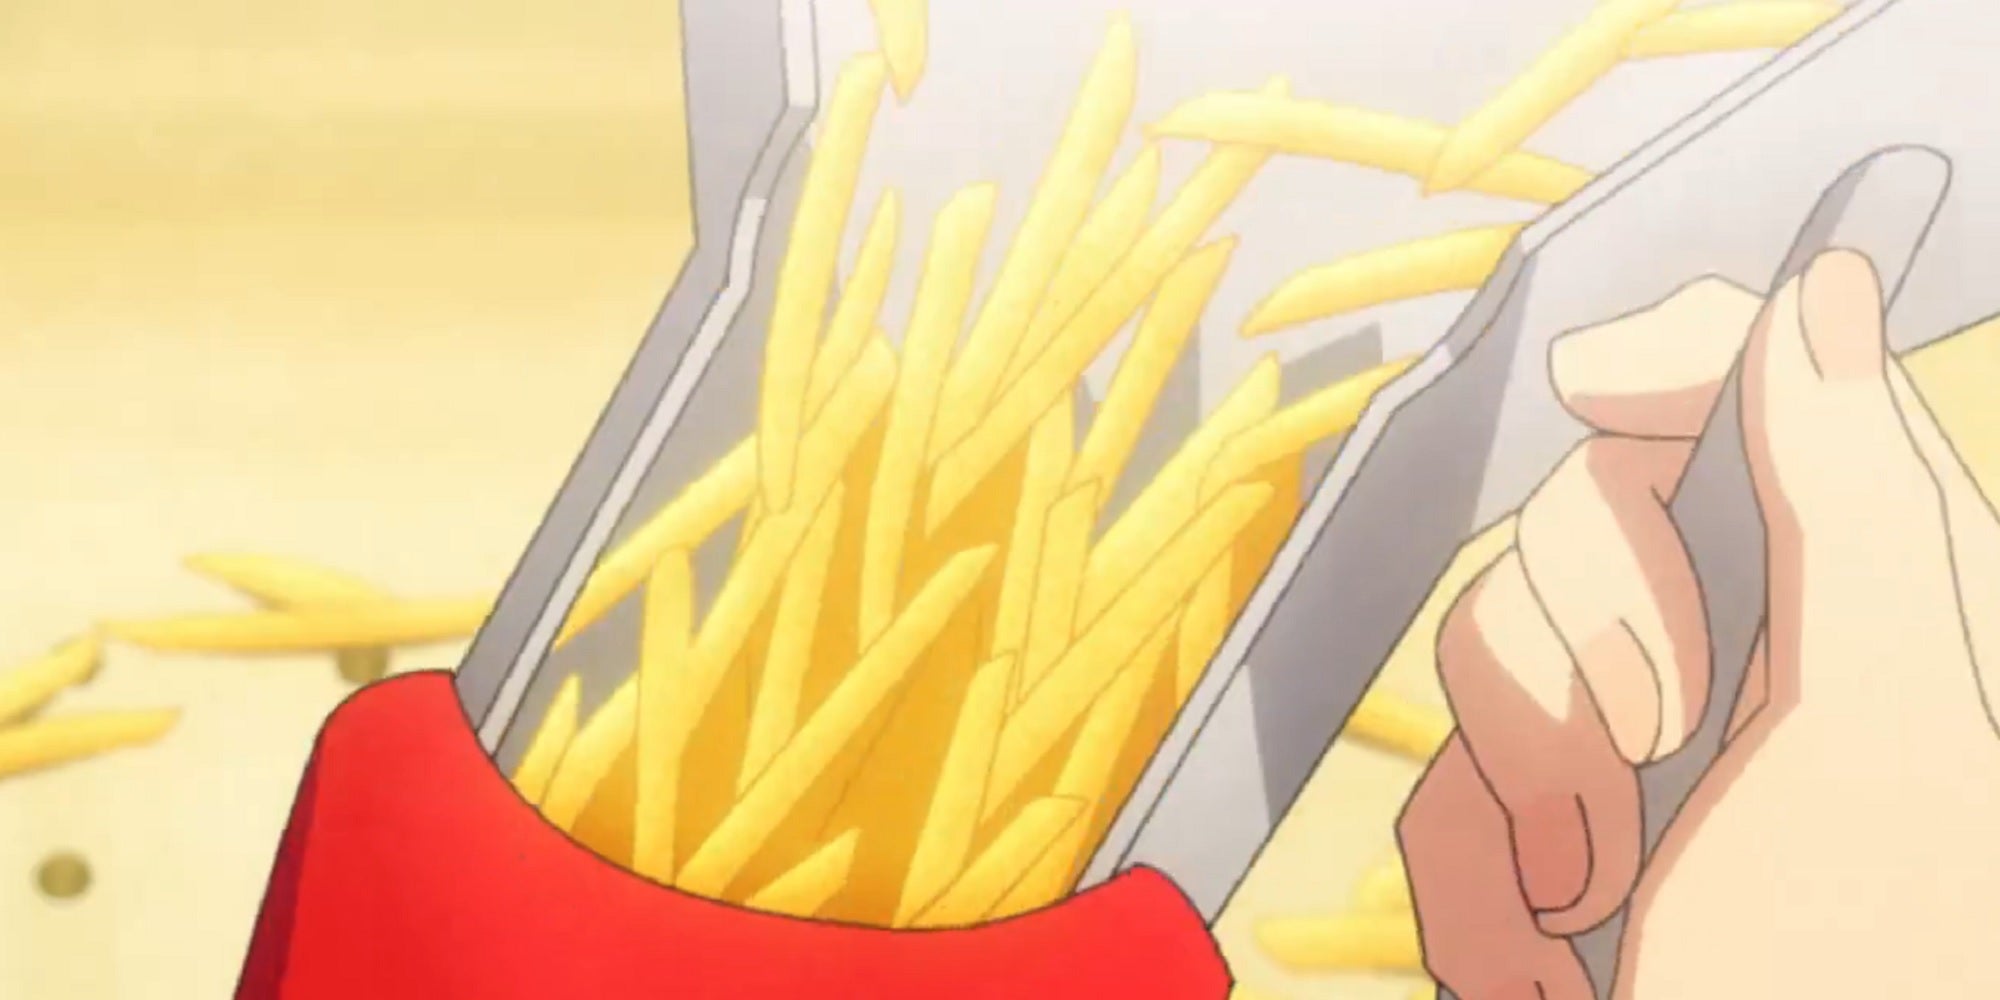 Ronald McDonald in JoJo styles anime by SethFury77 on DeviantArt